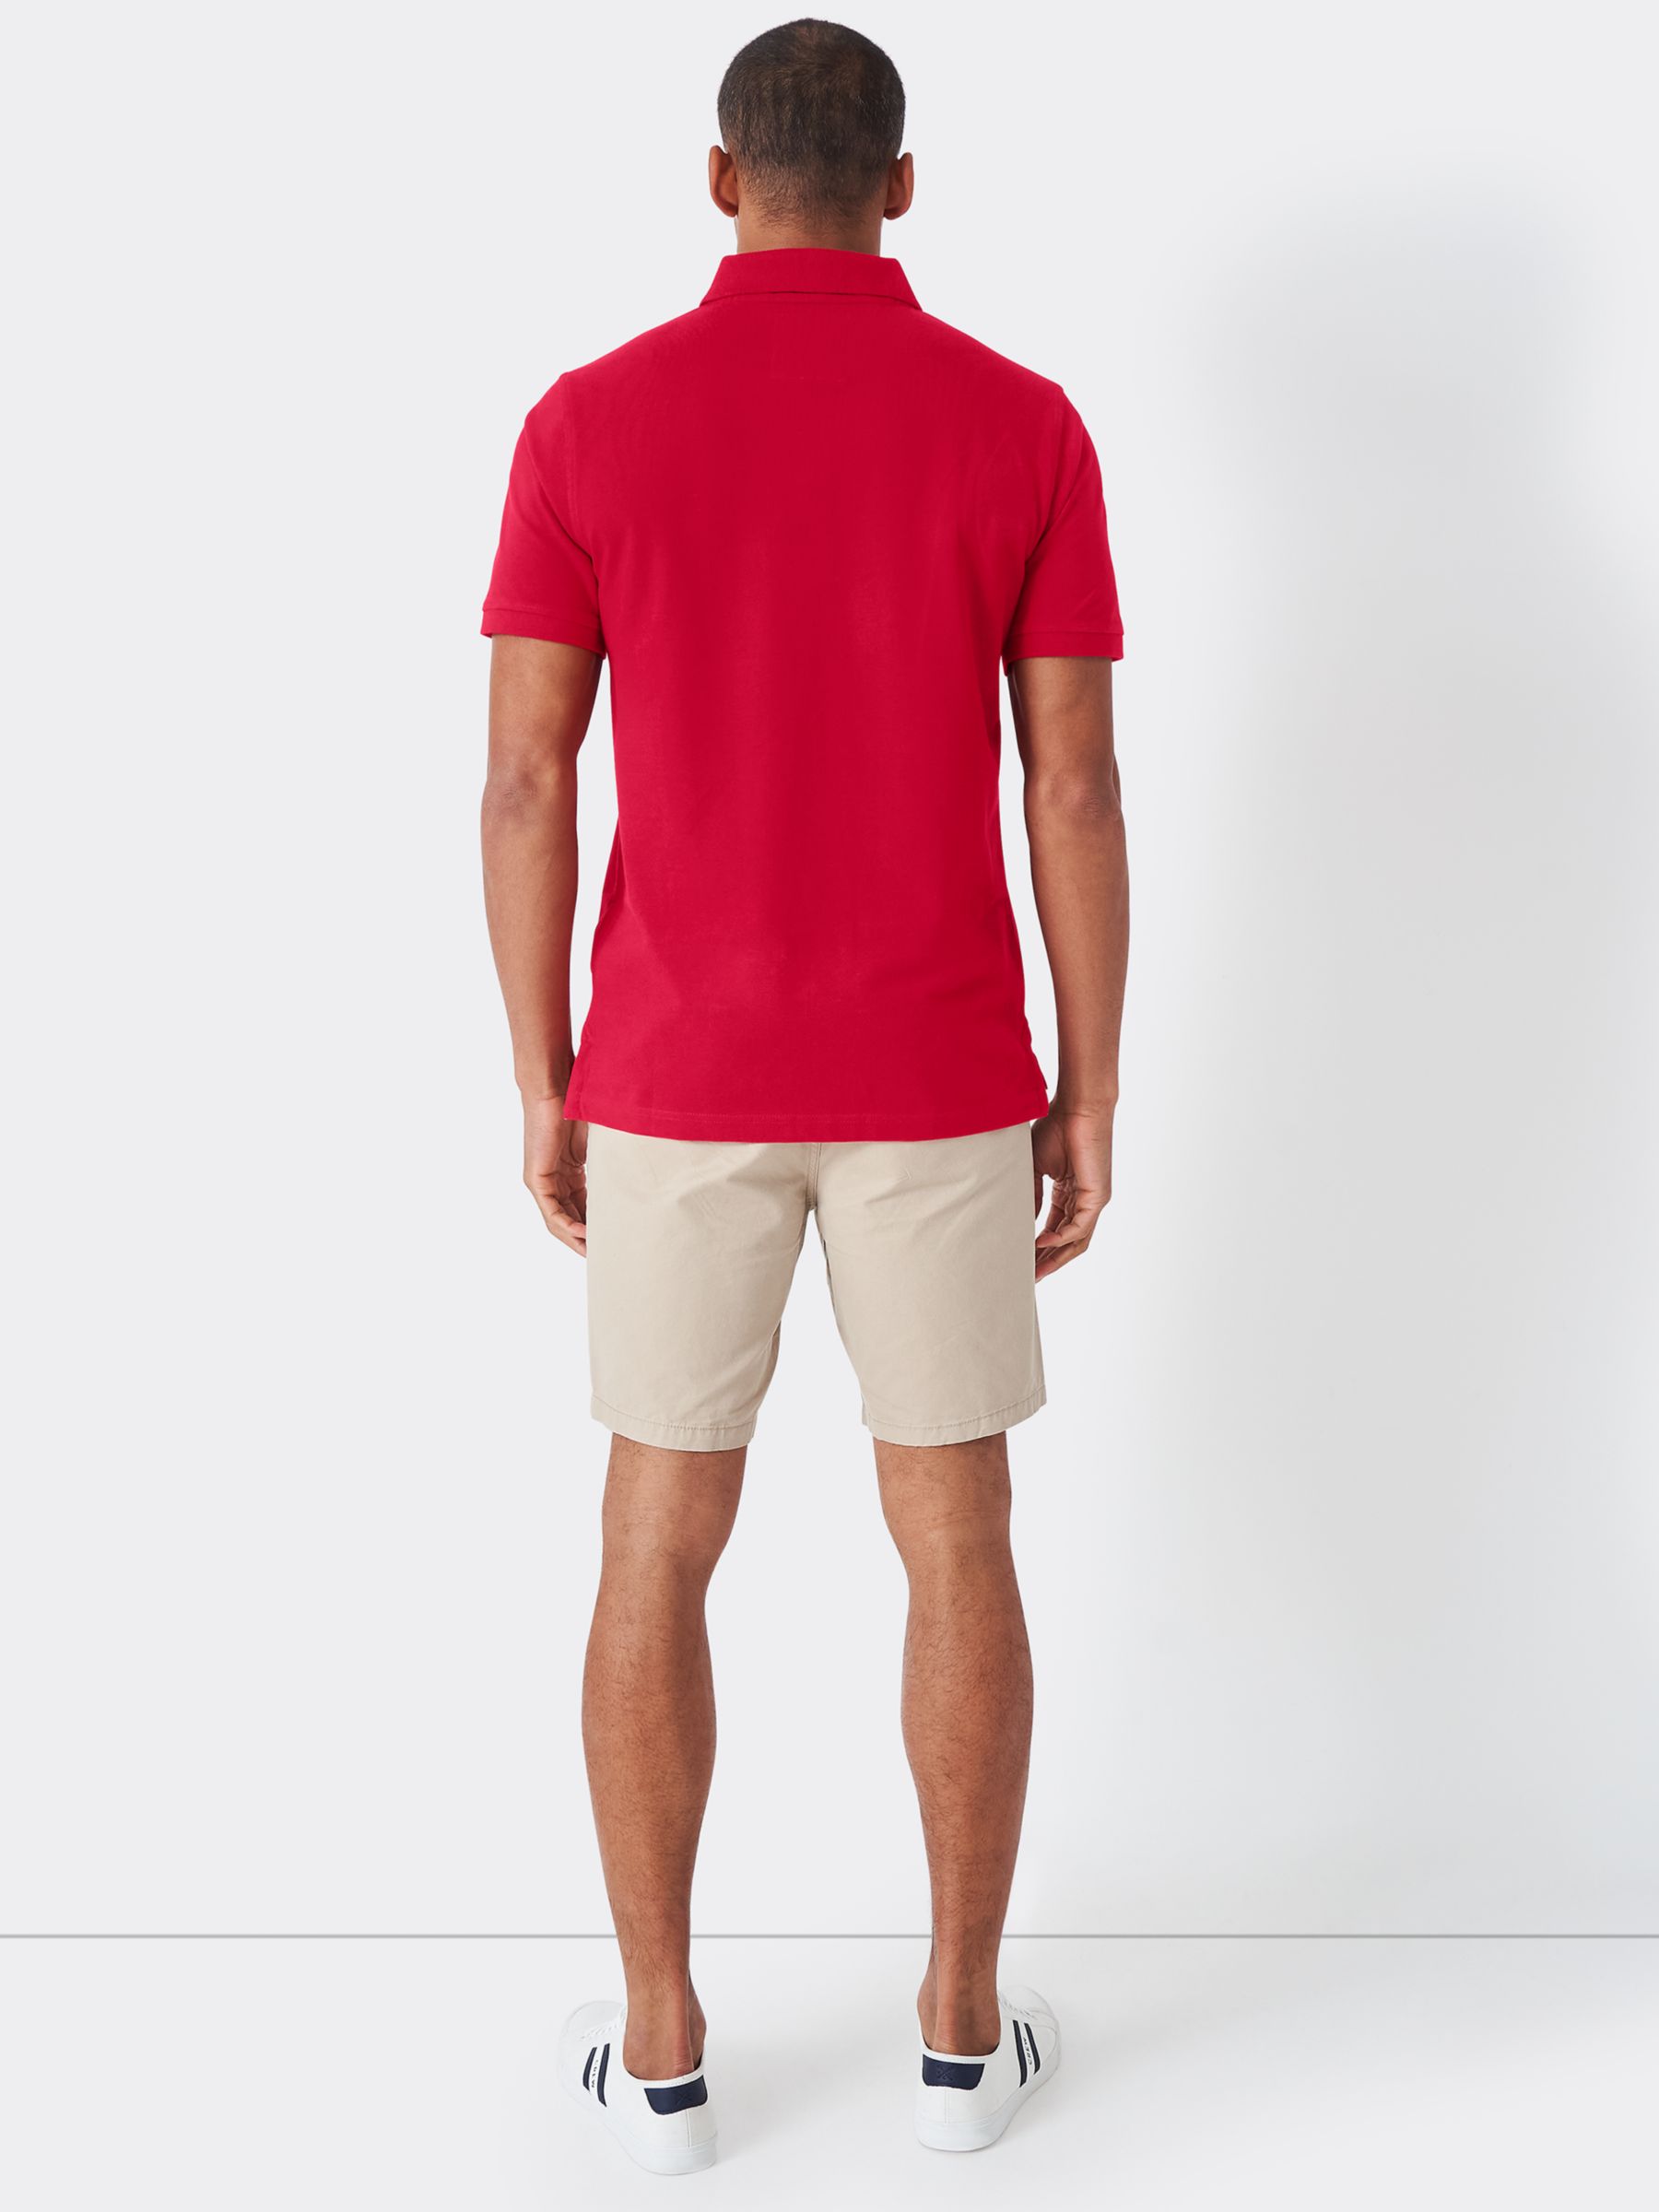 Crew Clothing Classic Pique Cotton Polo Shirt, Crimson Red, L